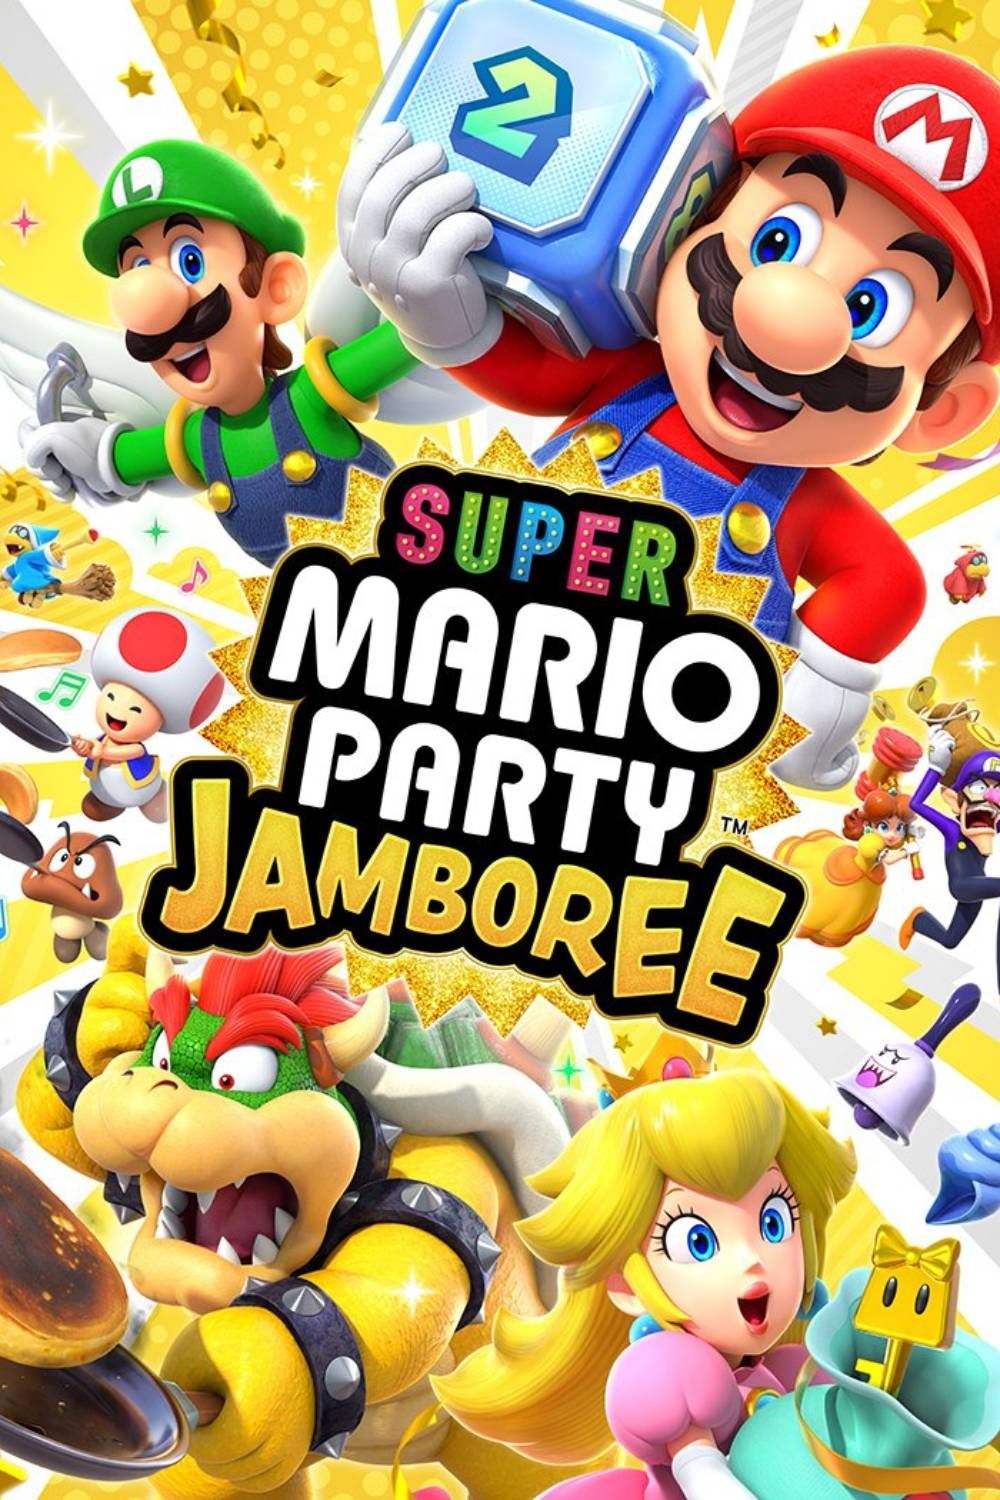 Super Mario Party Jamboree Tag Page Cover Art